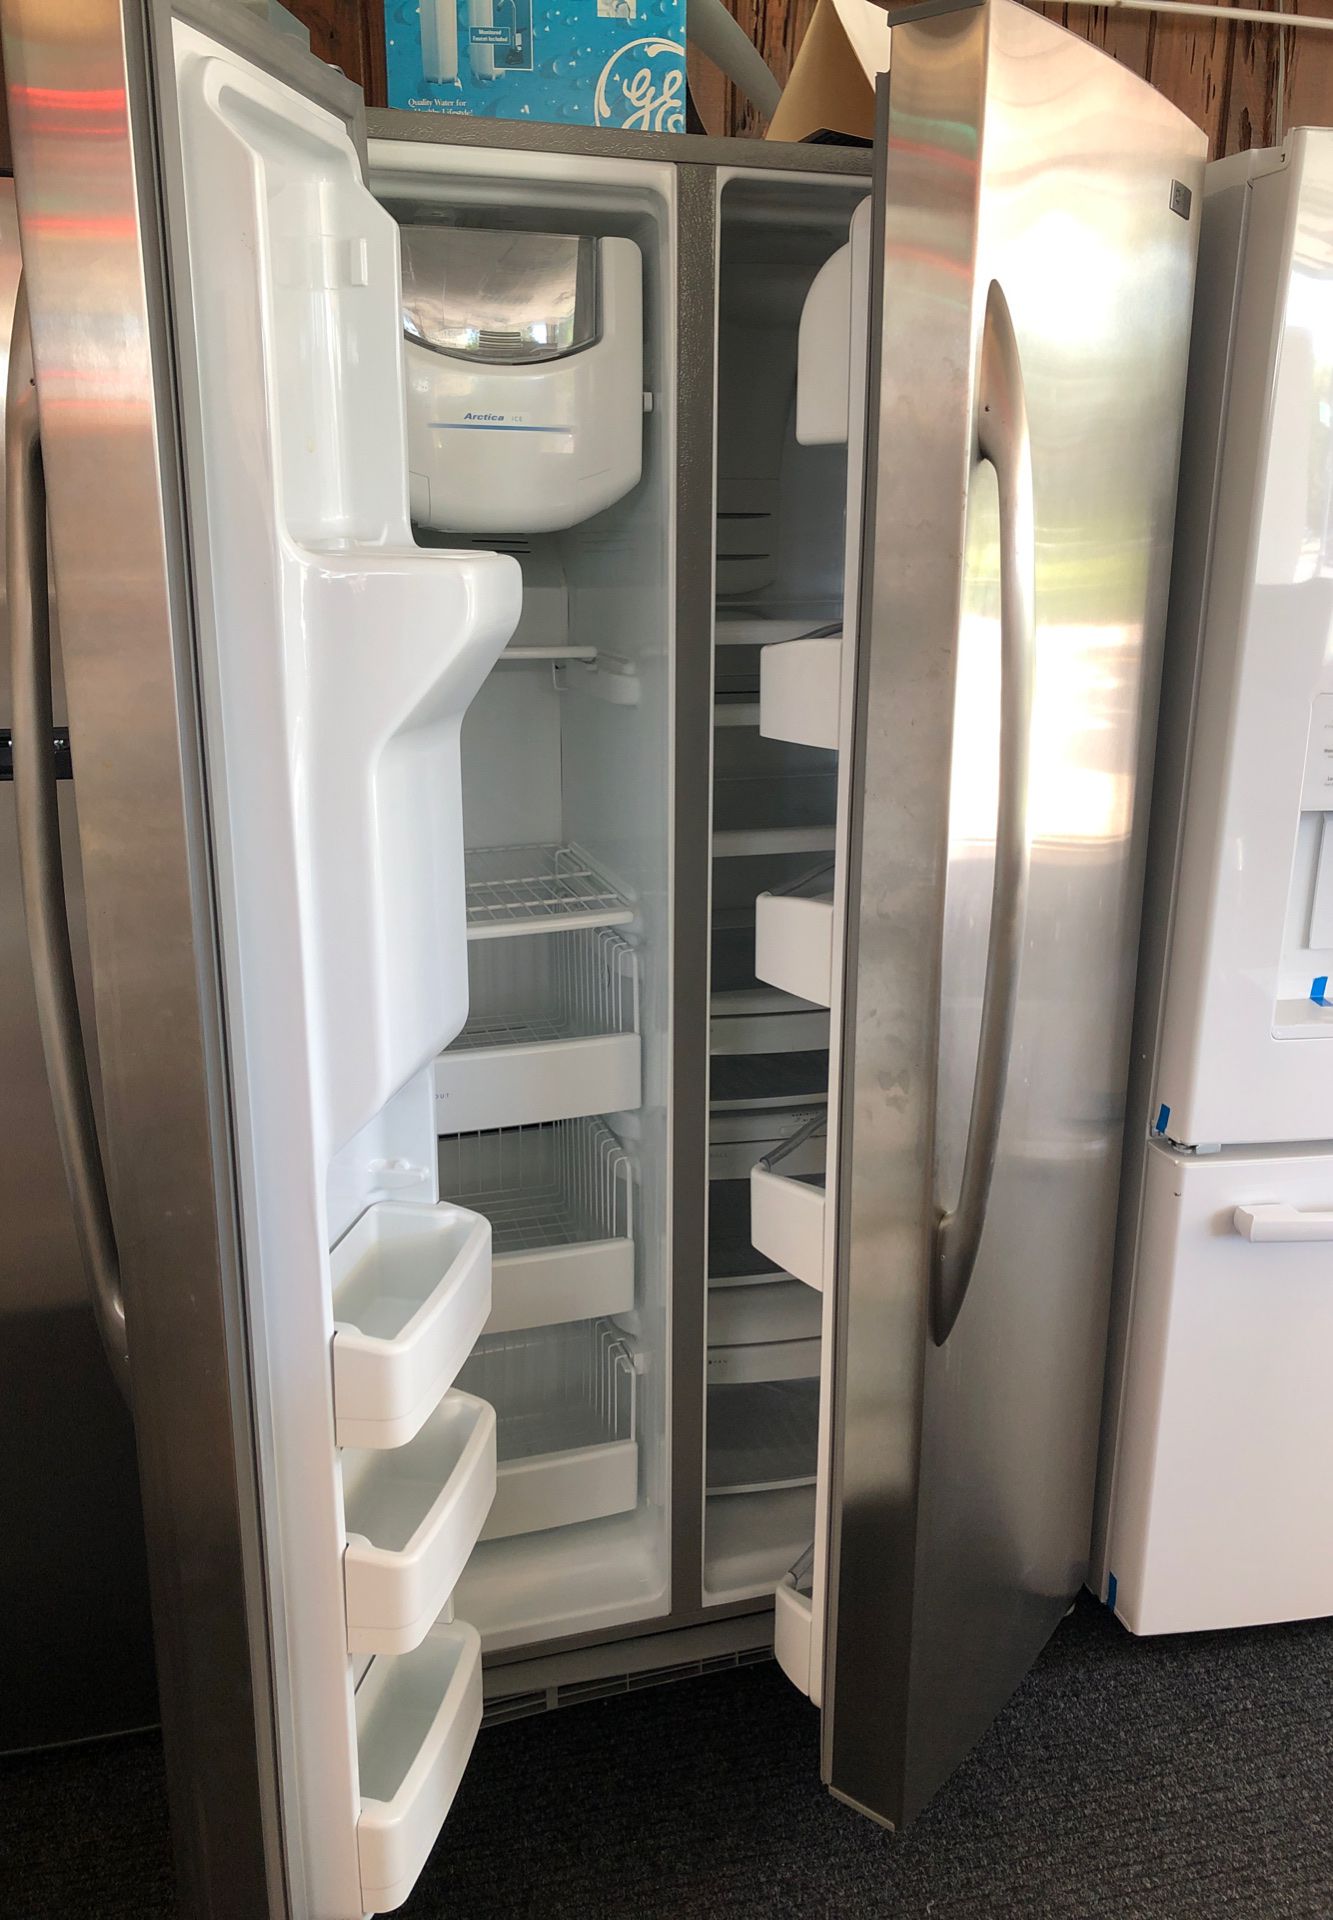 GE Profile side by side refrigerator.